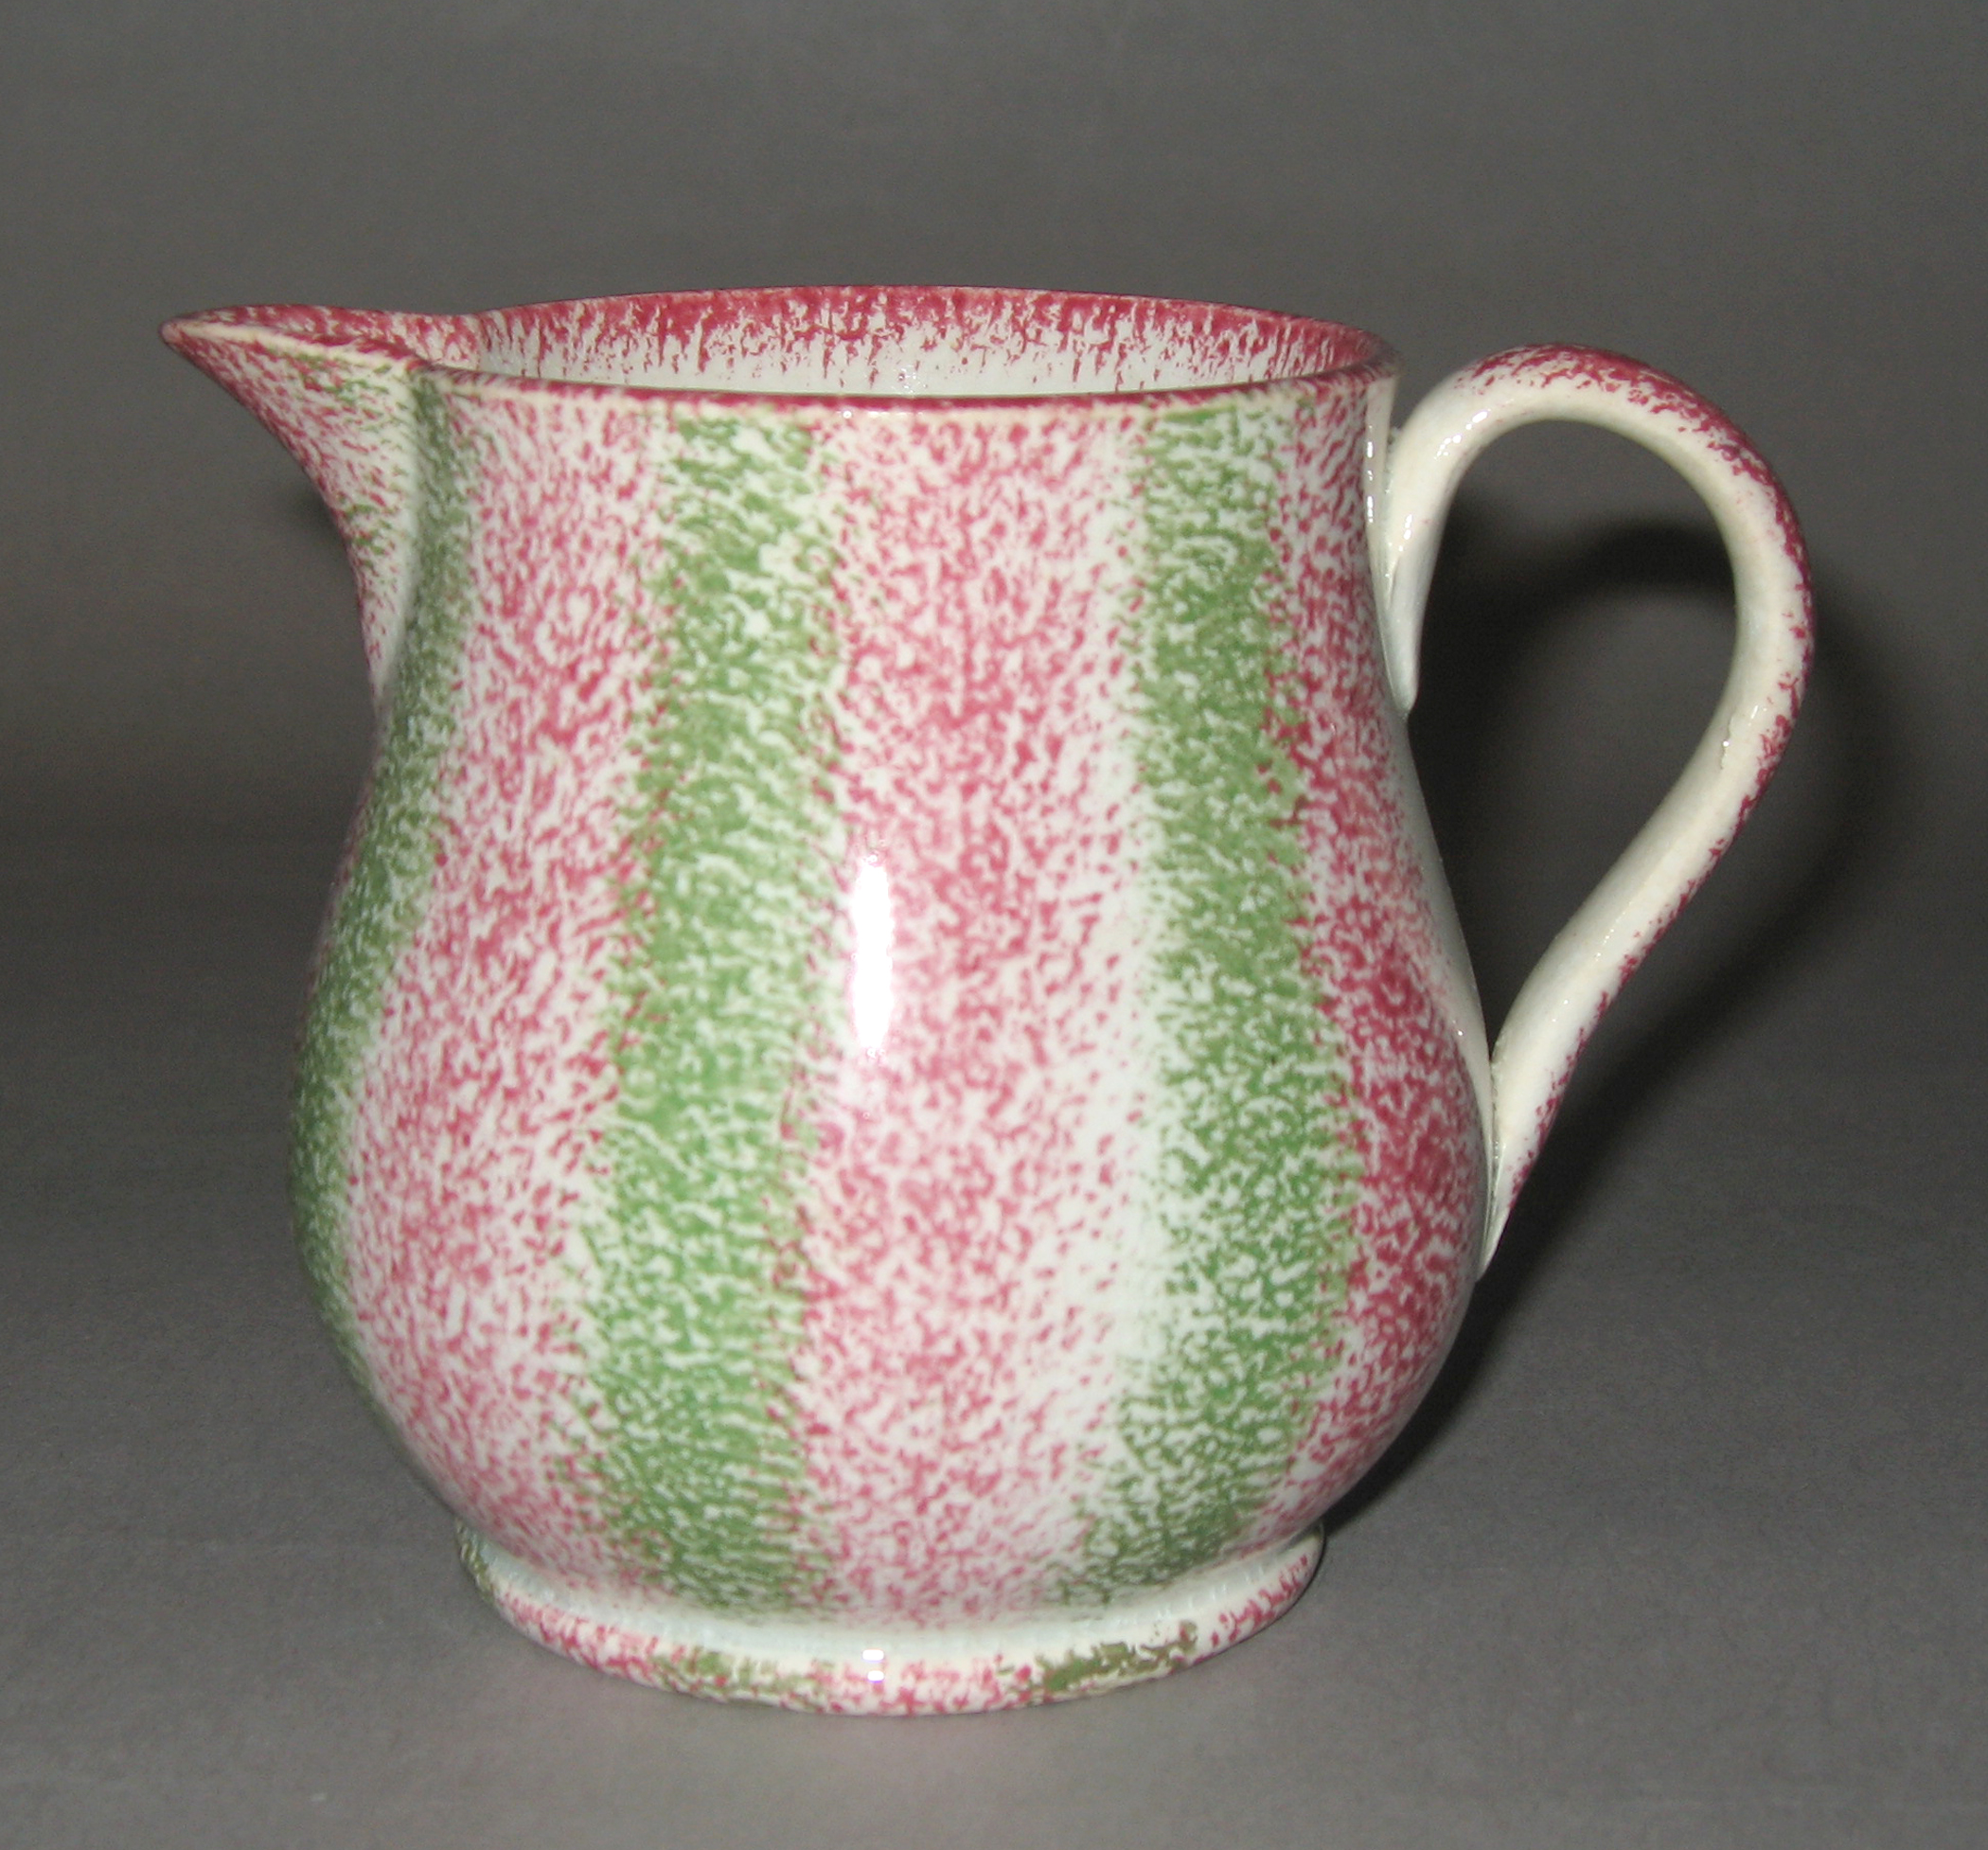 1965.0759 Spatterware jug